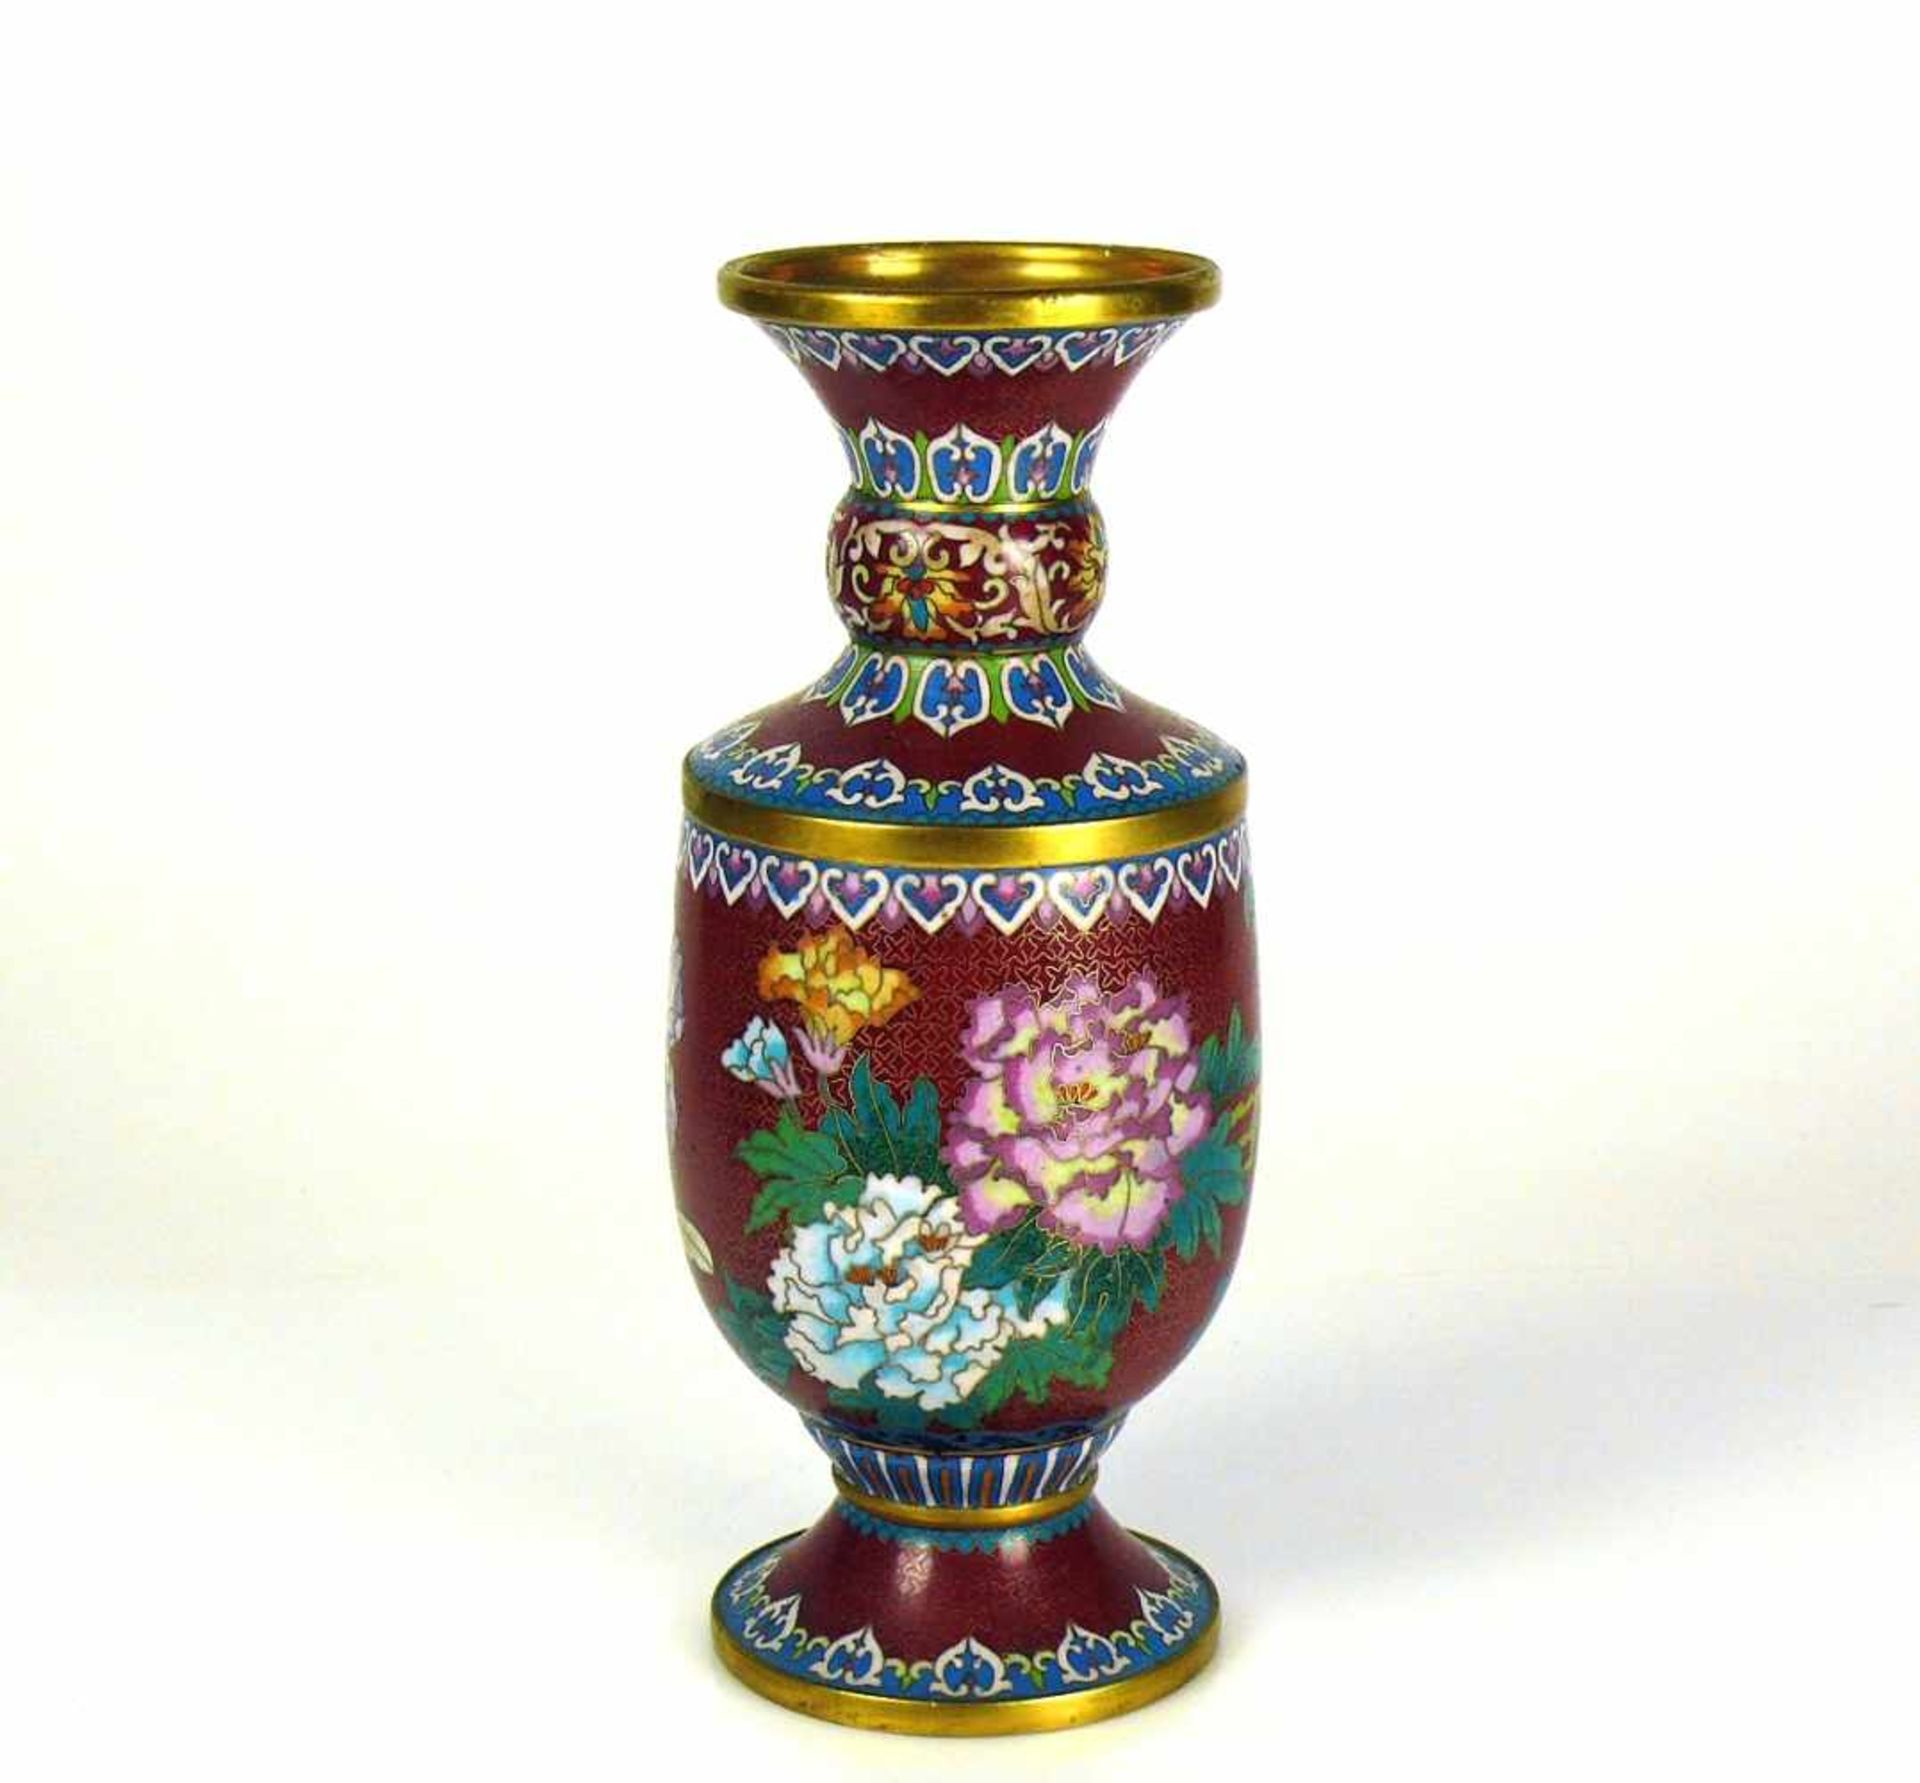 Cloisonné-Vase (China)auf rotem Grund farbiger Blütendekor mit Vogel; H: 26 cm; D: 8,5 cm